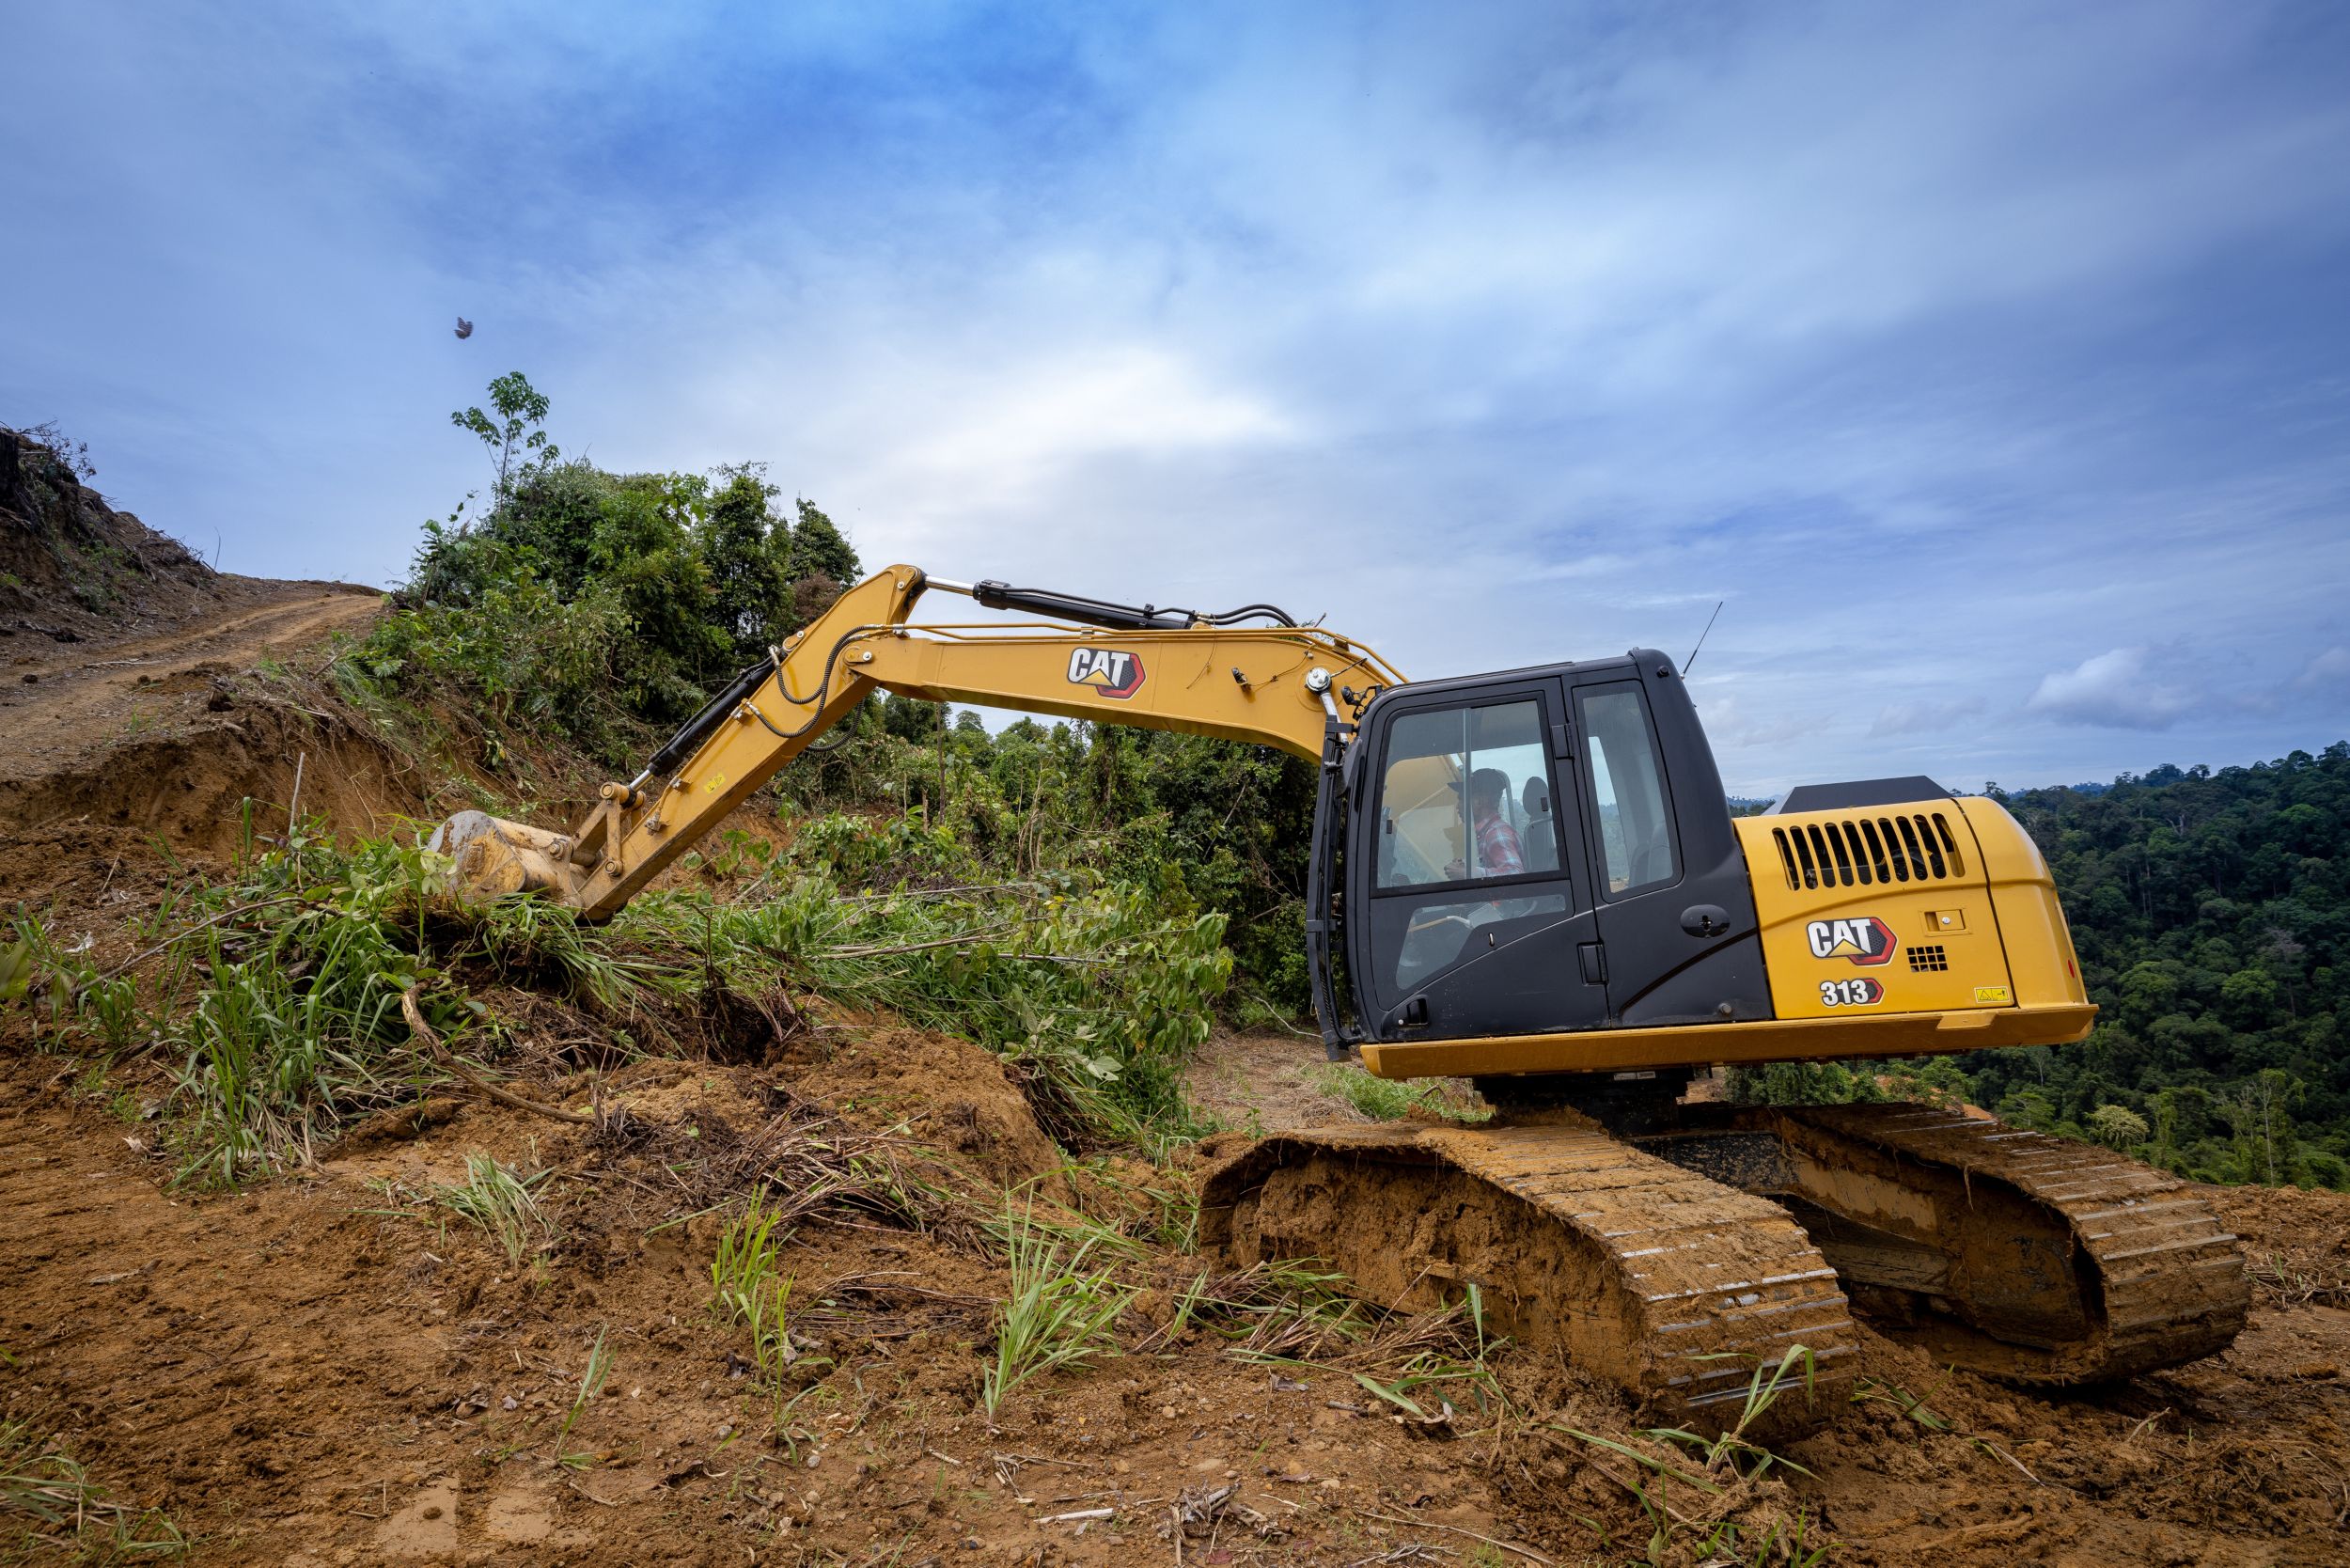 Hydraulic trackhoe excavator Cat 313 dengan tekanan ke tanah rendah menghadirkan daya, kinerja, kontrol, fungsi penggalian, pembuatan parit, dan kemampuan angkat berat yang unggul untuk proyek skala besar Anda.